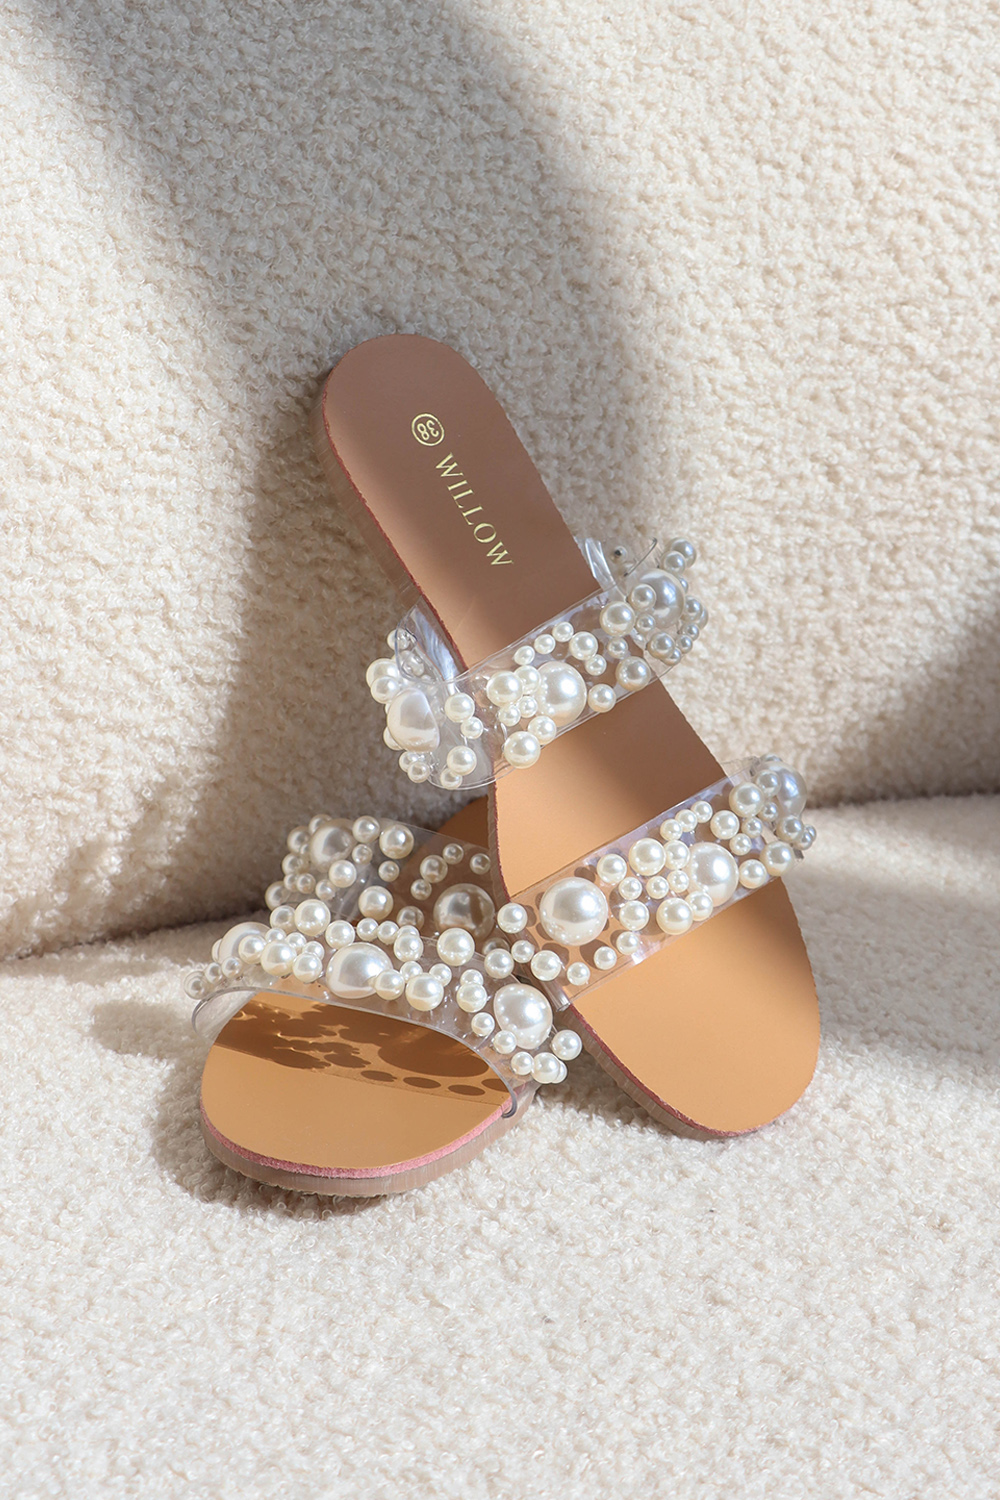 Open Toe Women Sandals Slippers Flats Heeled Pearl Design Casual Slides  Slip On Mules Shoes Summer Slides Flip Flops Pumps 39 210513 From 22,67 € |  DHgate